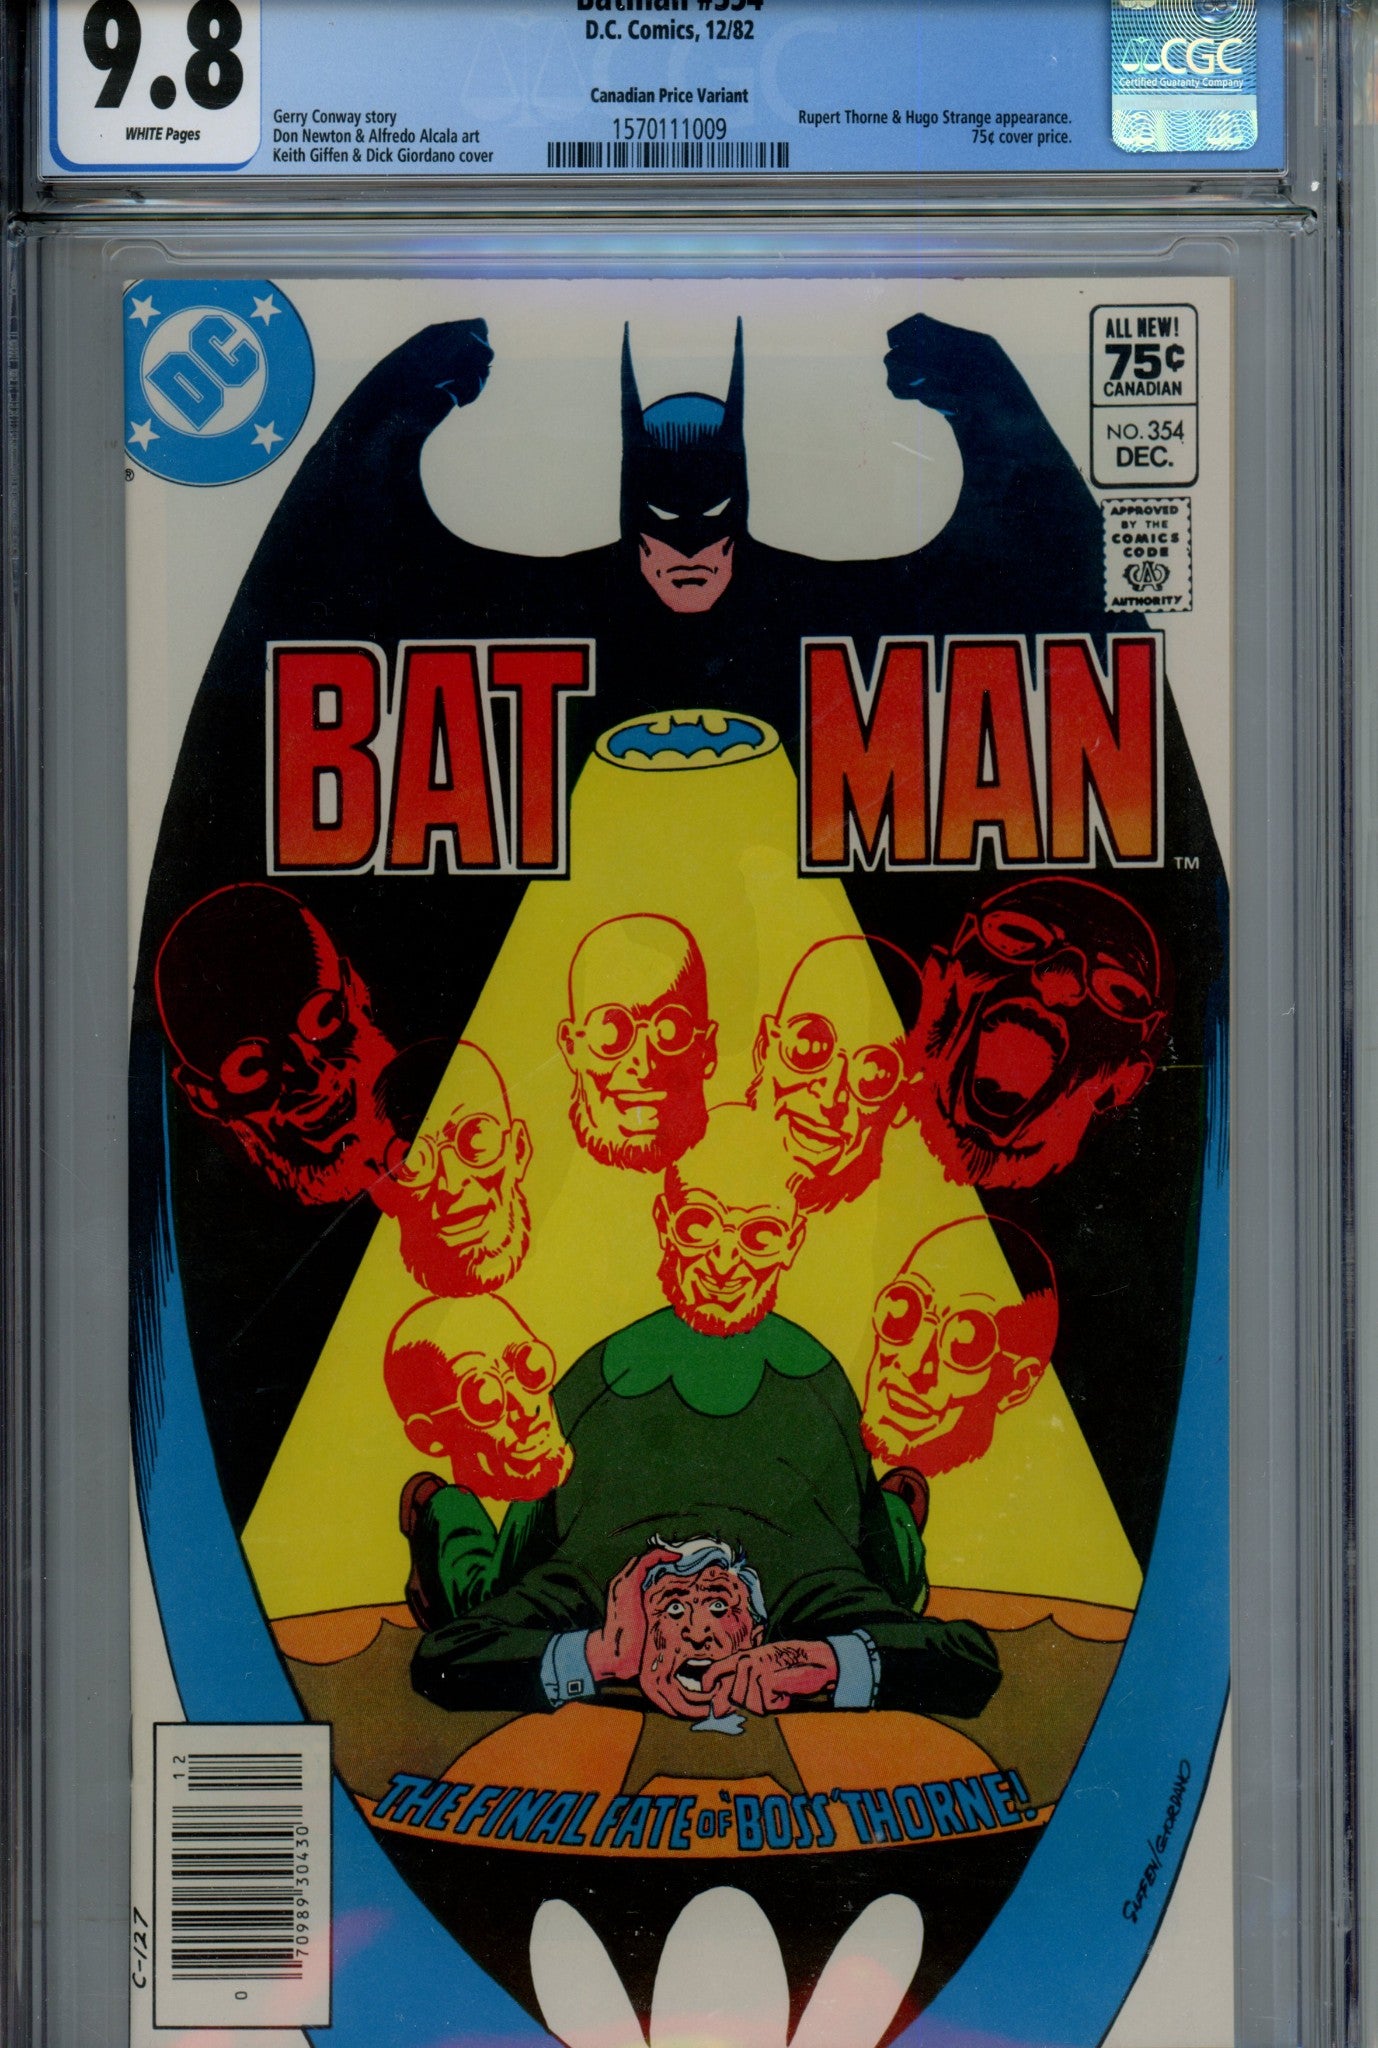 Batman Vol 1 354 Canadian Price Variant CGC 9.8 (1982)